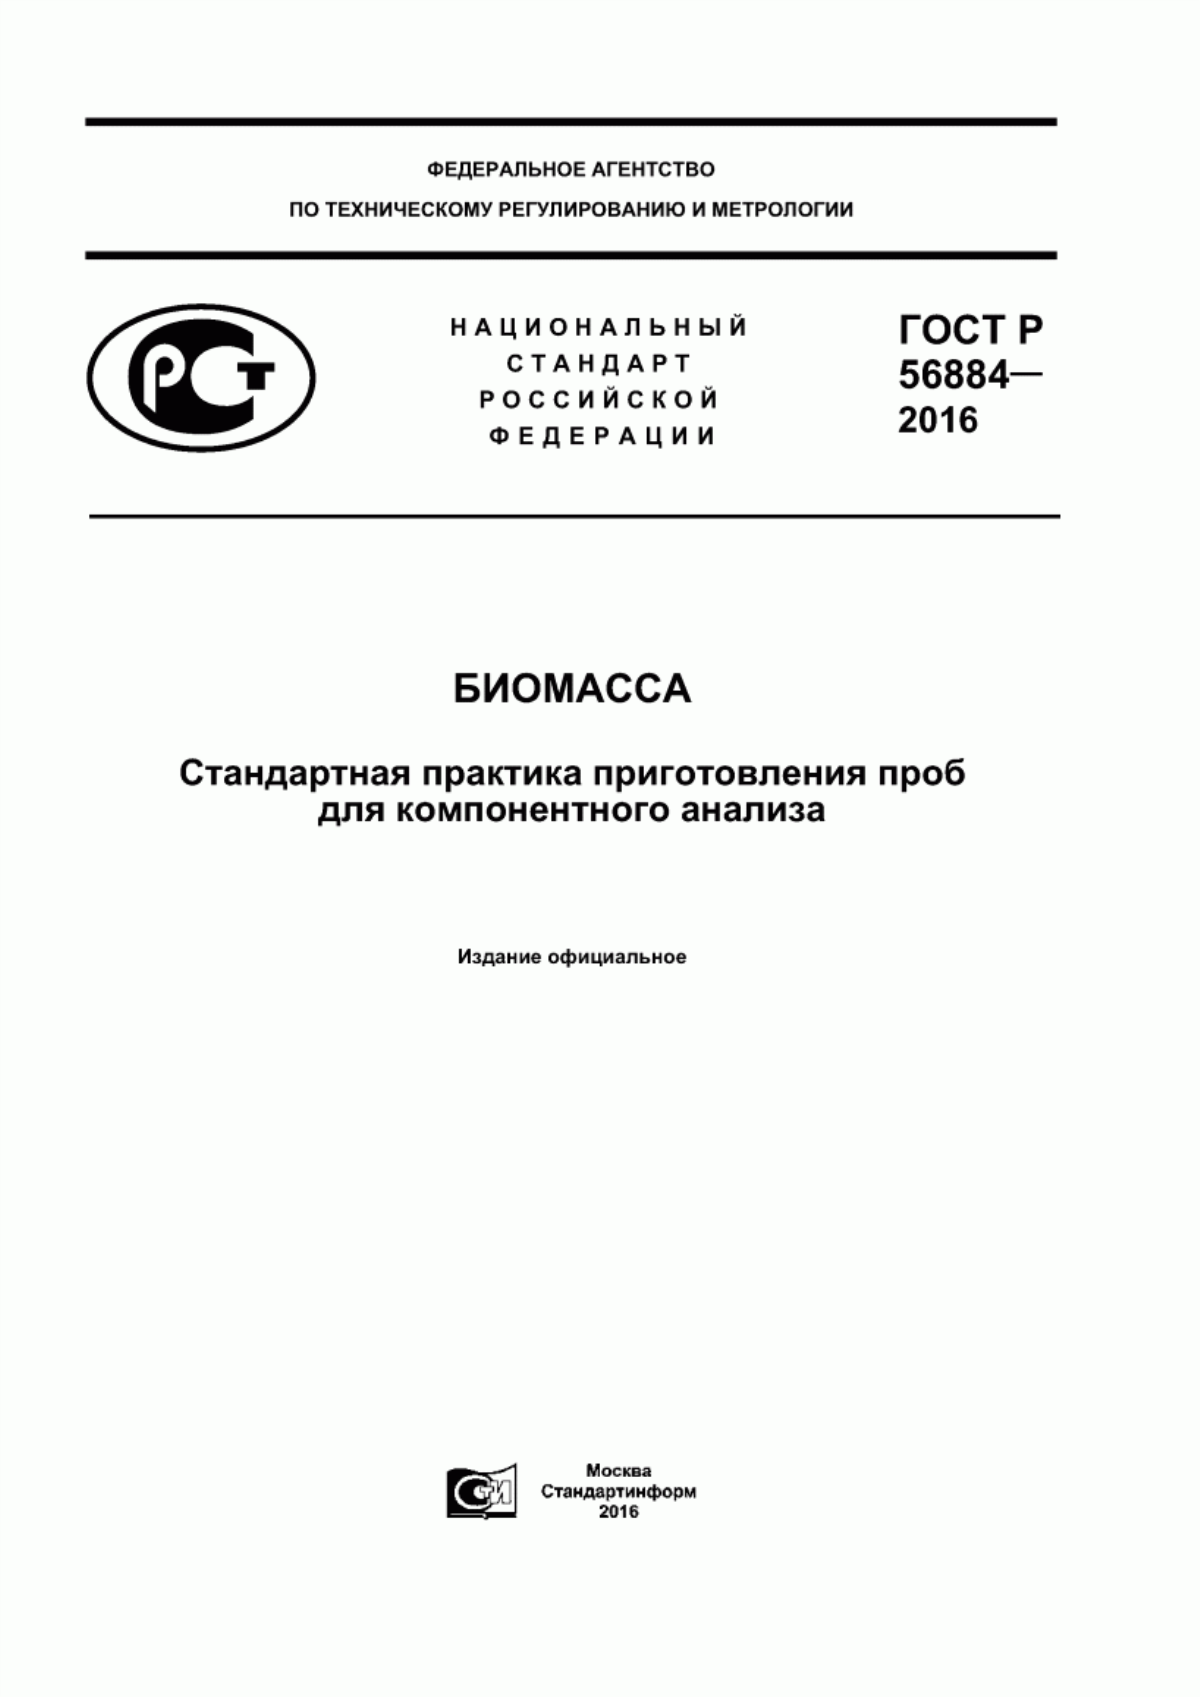 ГОСТ Р 56884-2016 Биомасса. Стандартная практика приготовления проб для компонентного анализа